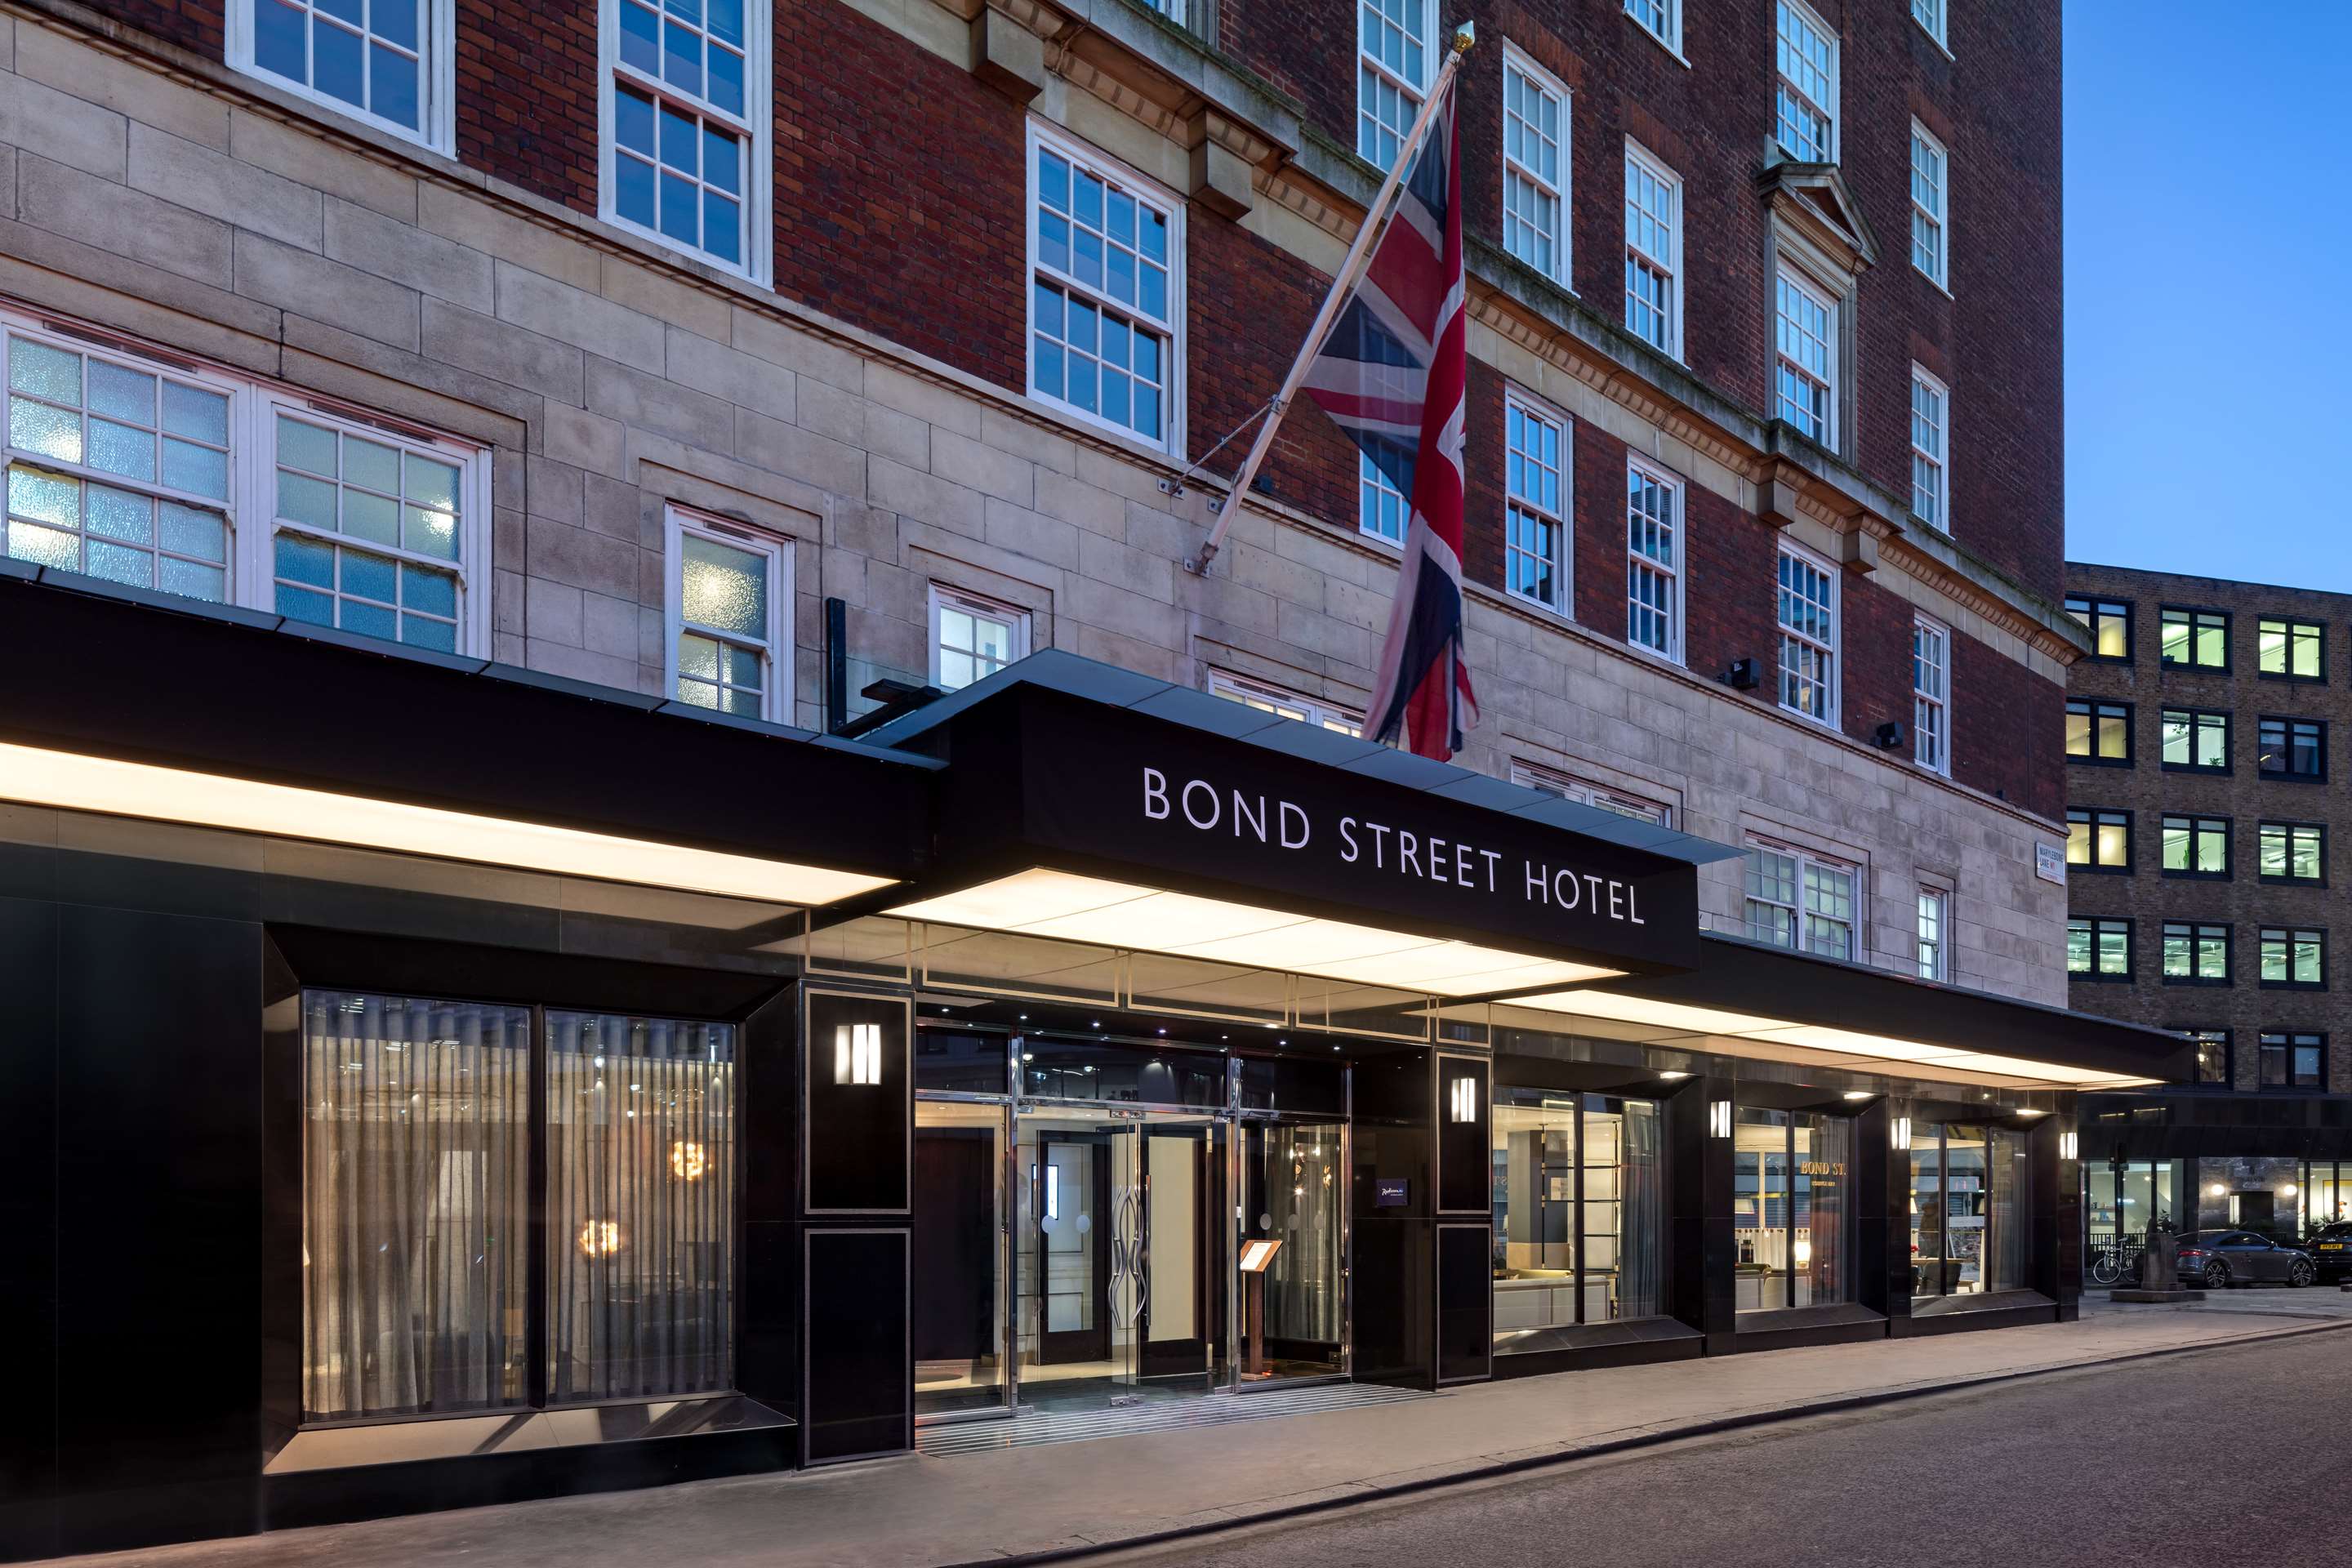 Luxury Shopping in London, Old & New Bond Street 